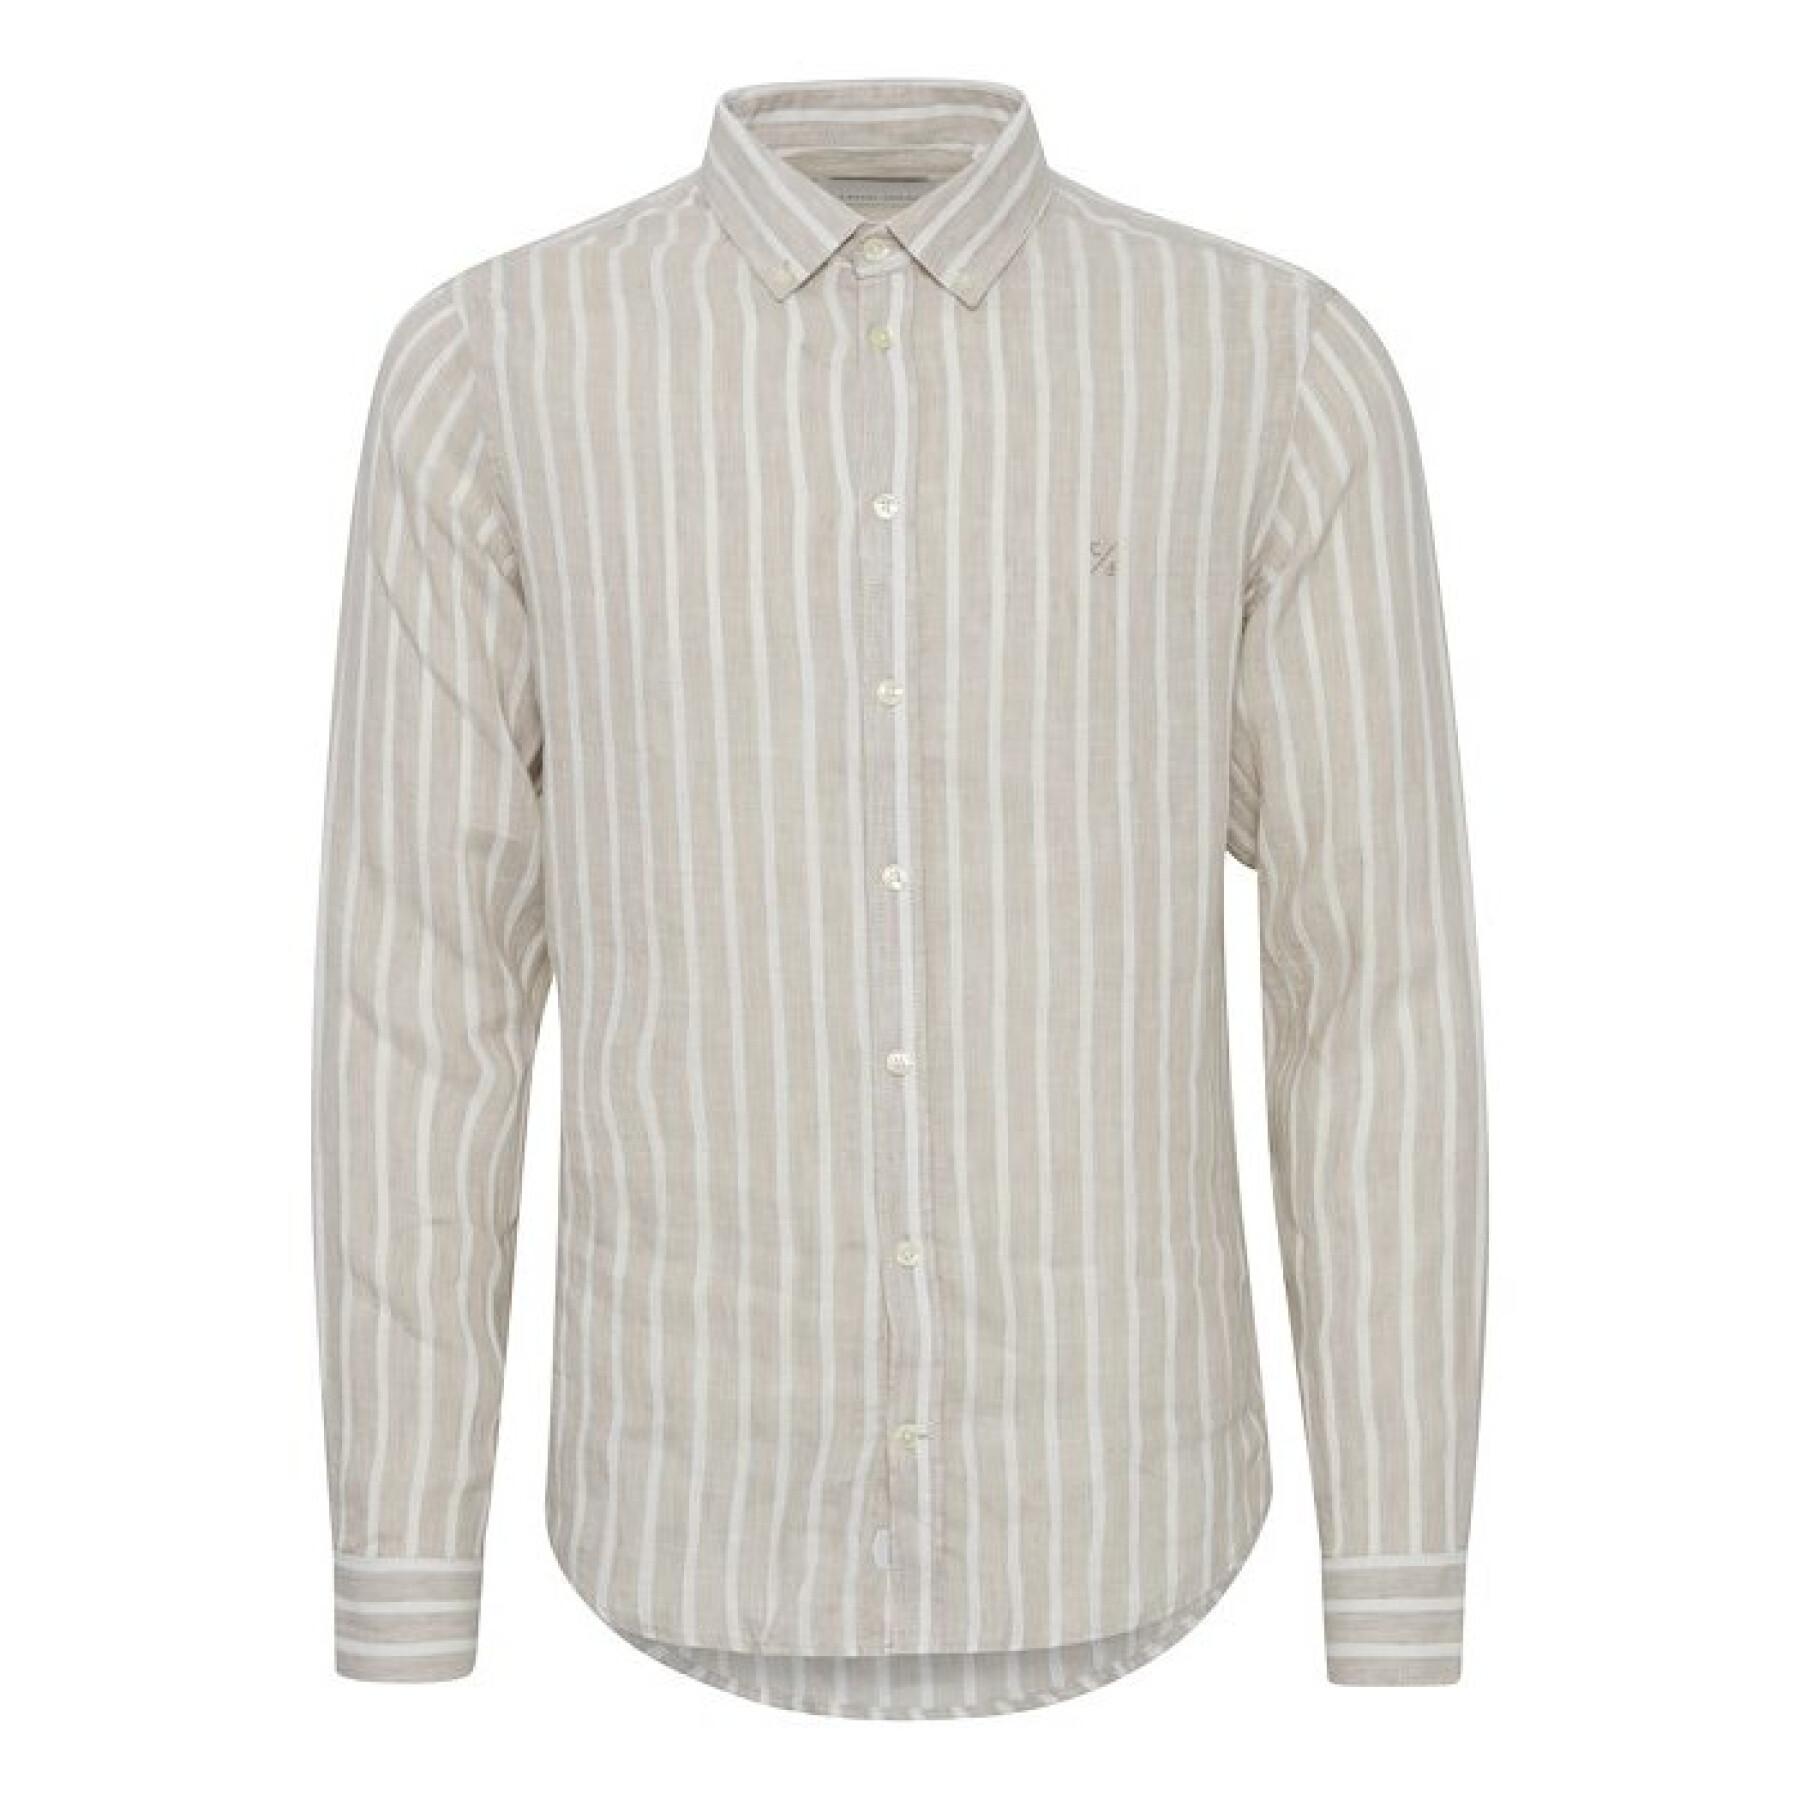 Striped linen shirt Casual Friday Anton 0071